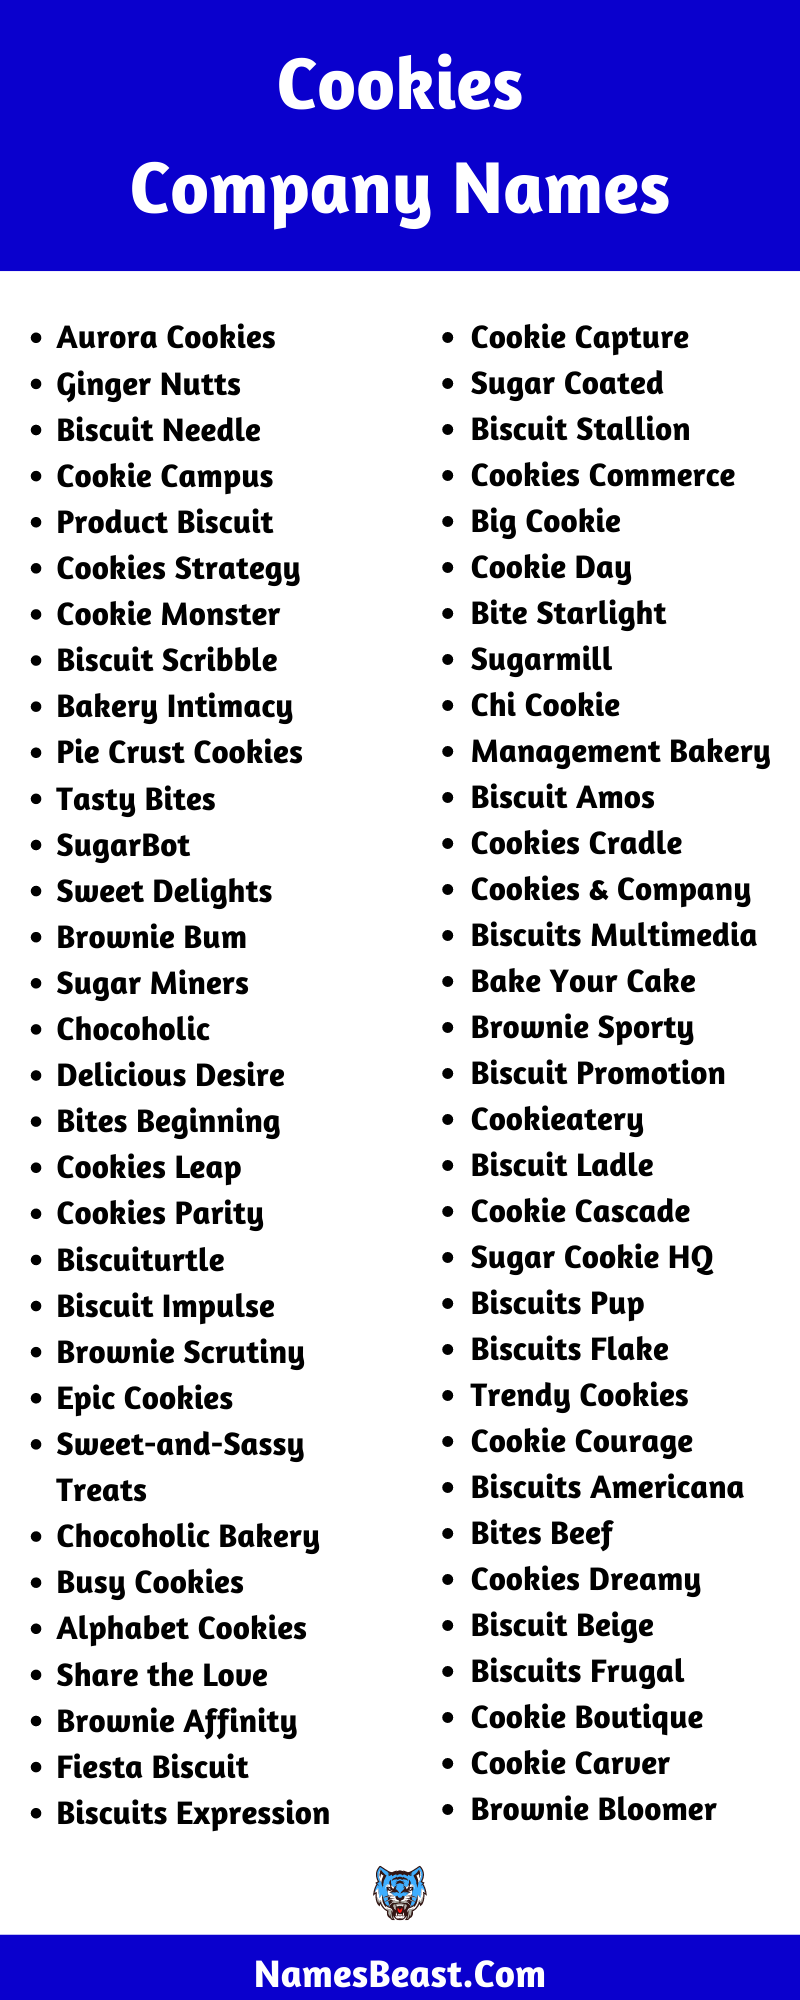 Cookies Company Names